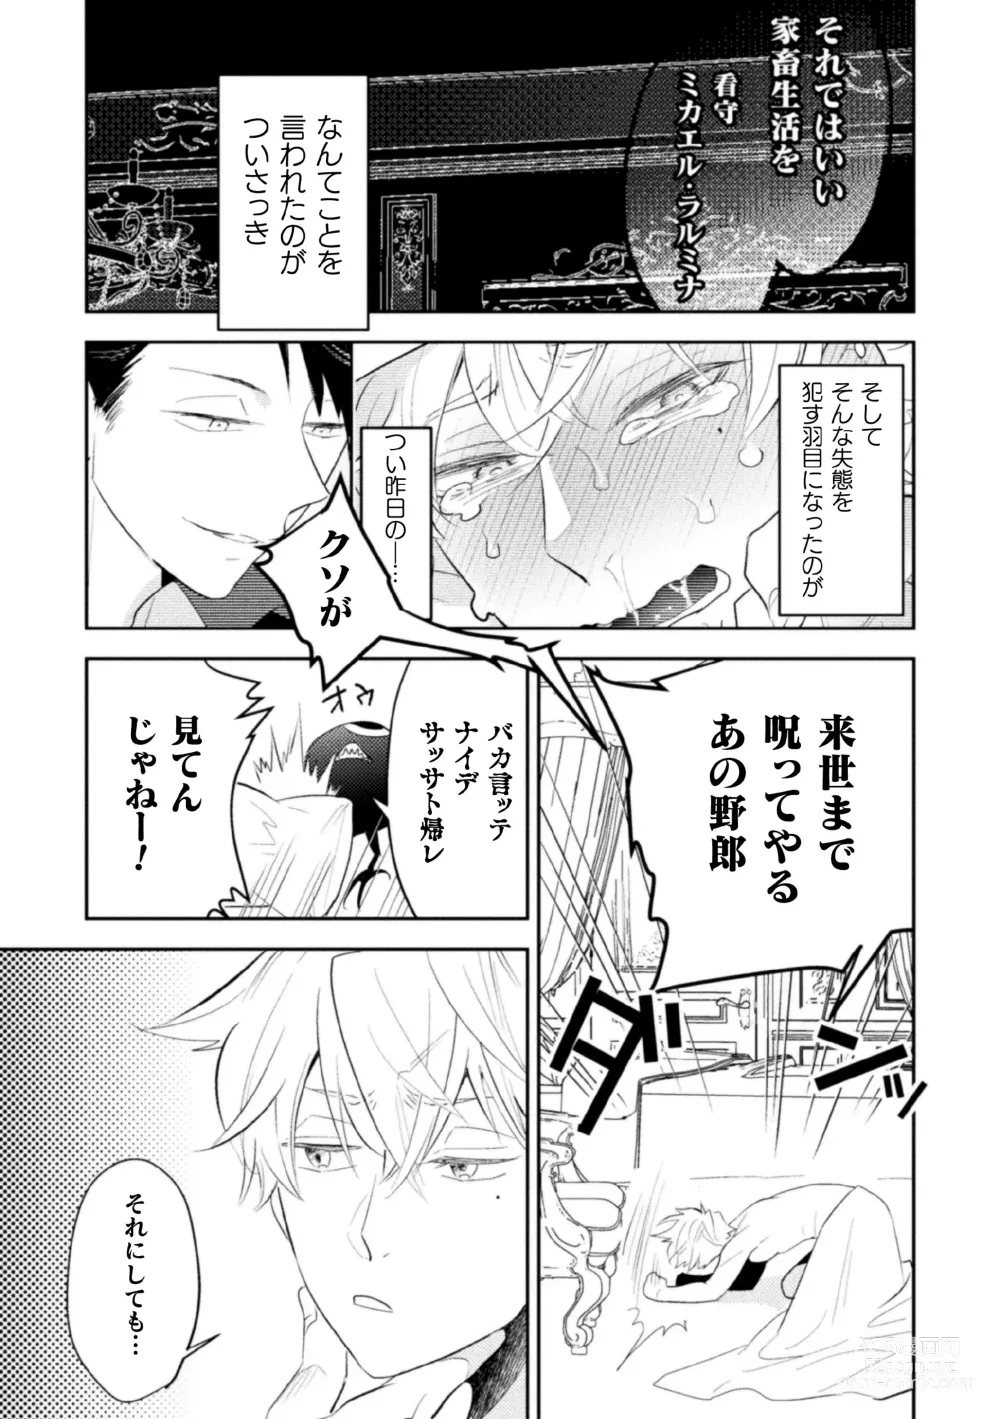 Page 3 of manga Zekkai Rougoku 4 Zekkai no Ori to Inma no Wana